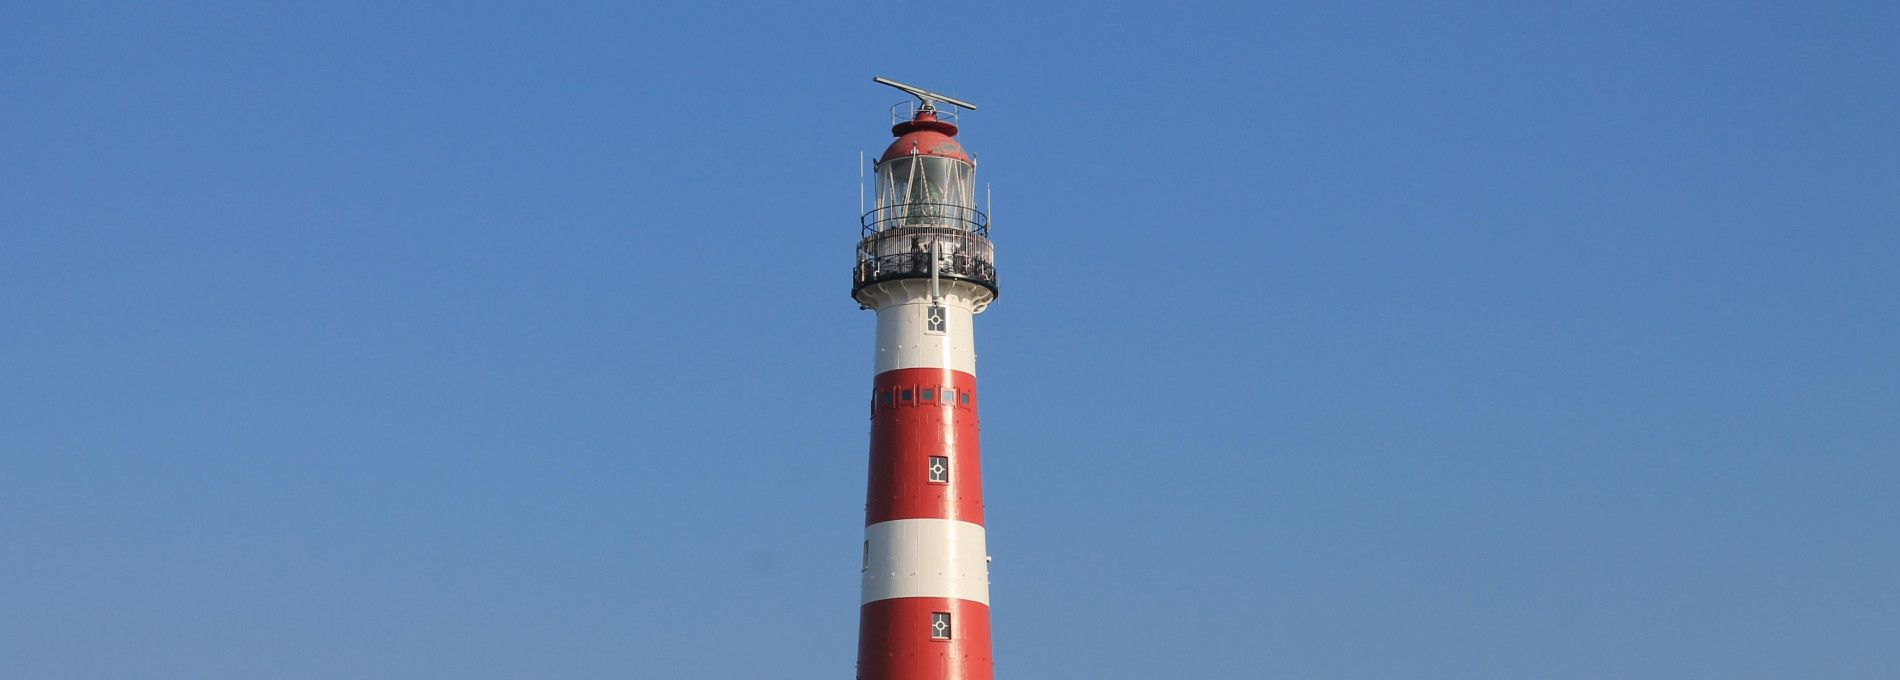 Lighthouse Ameland - Tourist Information “VVV” Ameland